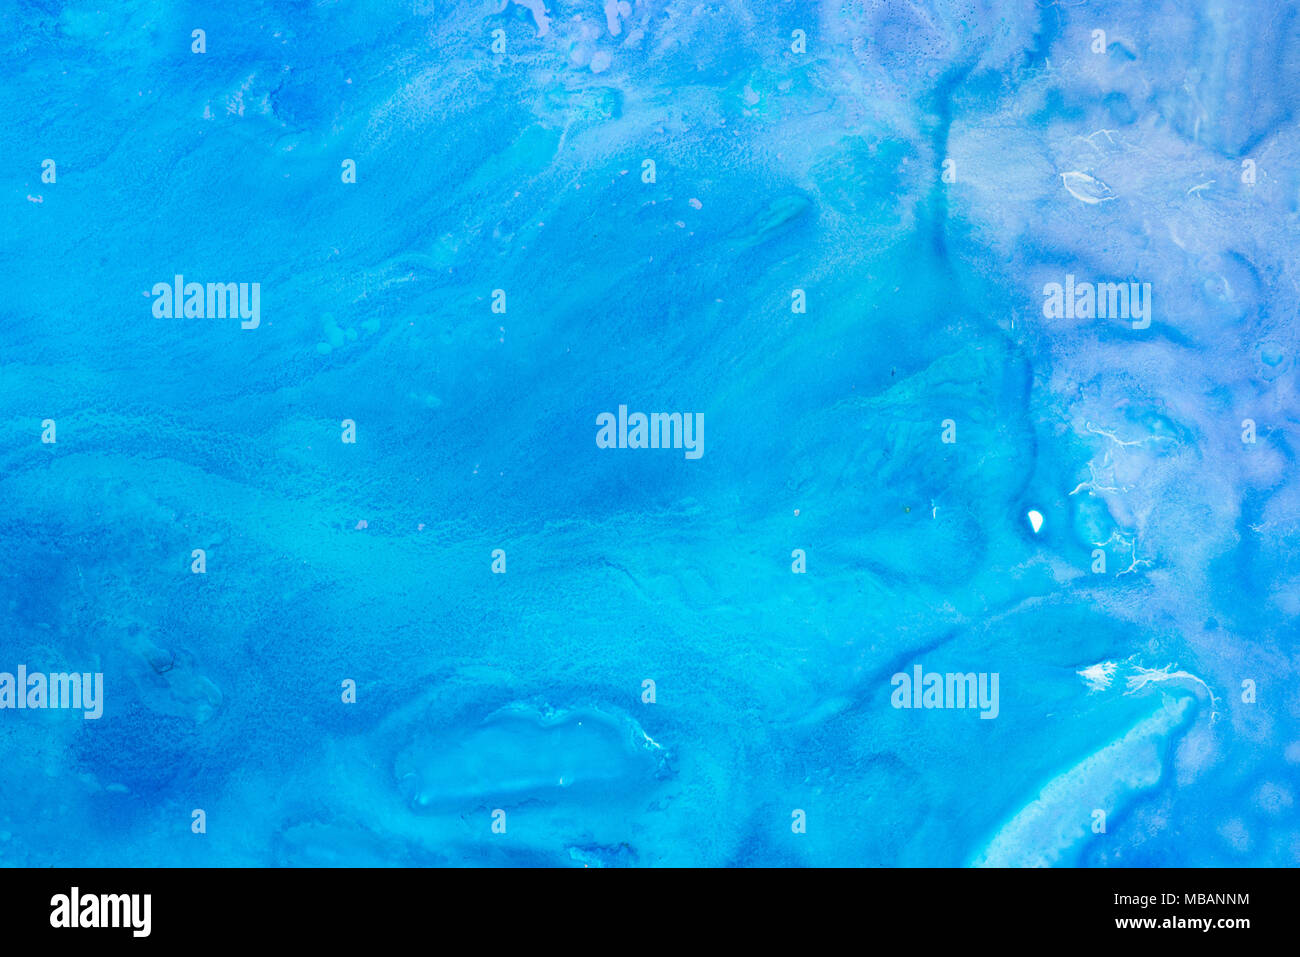 blaue Farbe Aquarell gemalt Hintergrundtextur Stockfoto